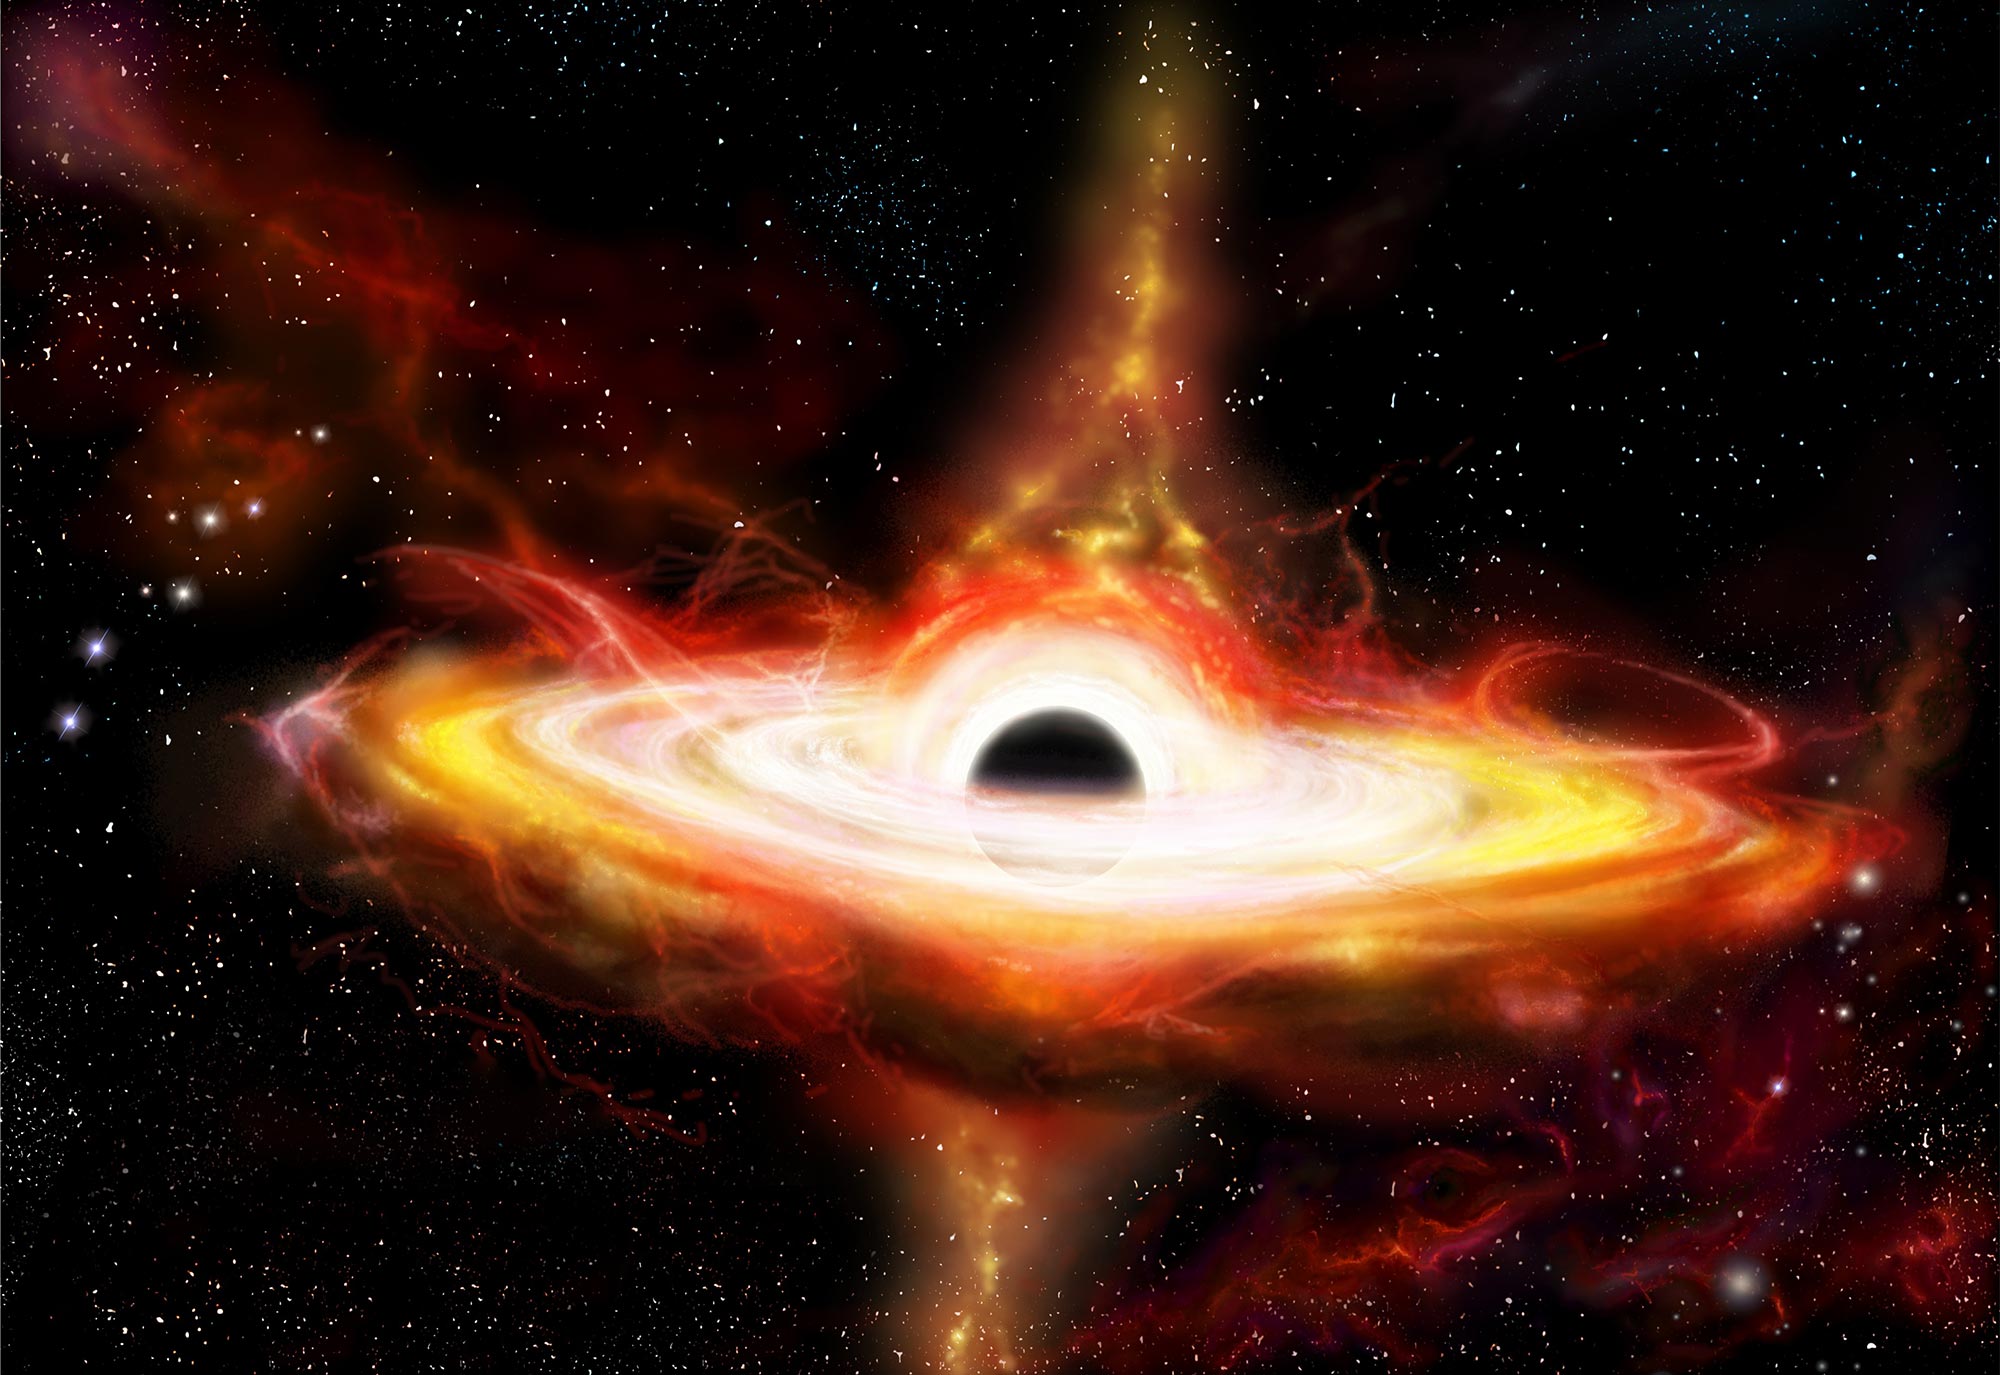 Illustration of a quasar supermassive black hole